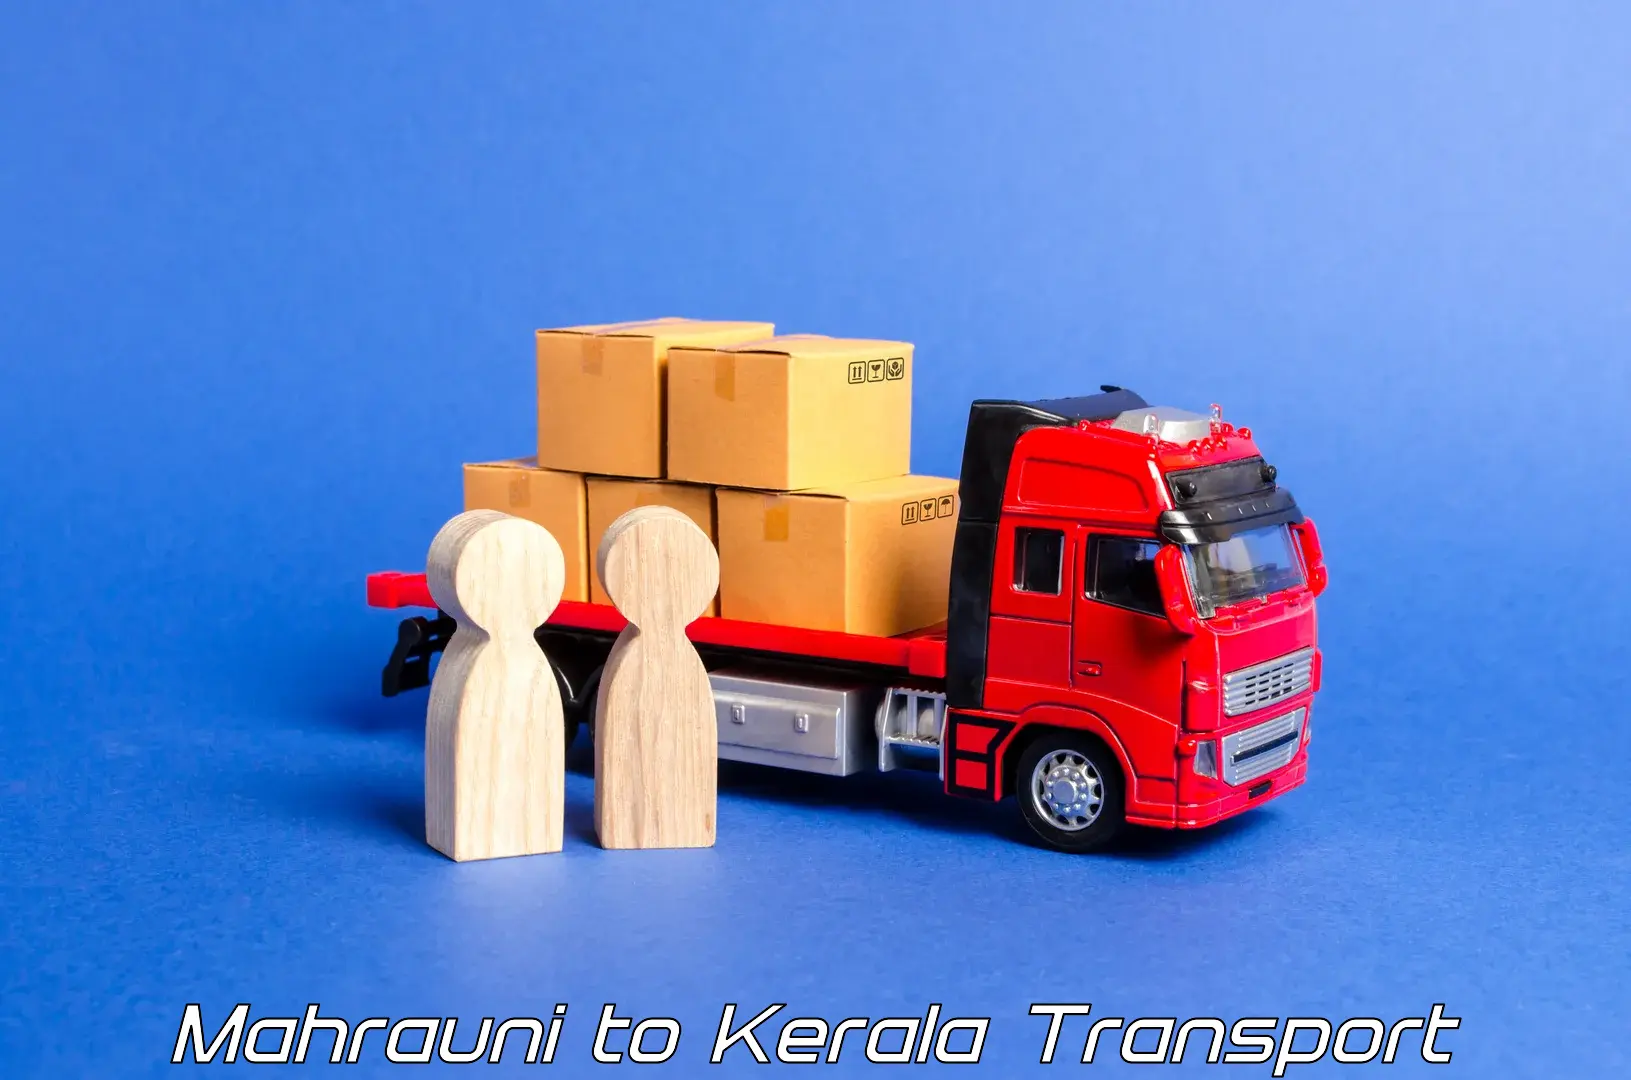 Pick up transport service Mahrauni to Chungathara